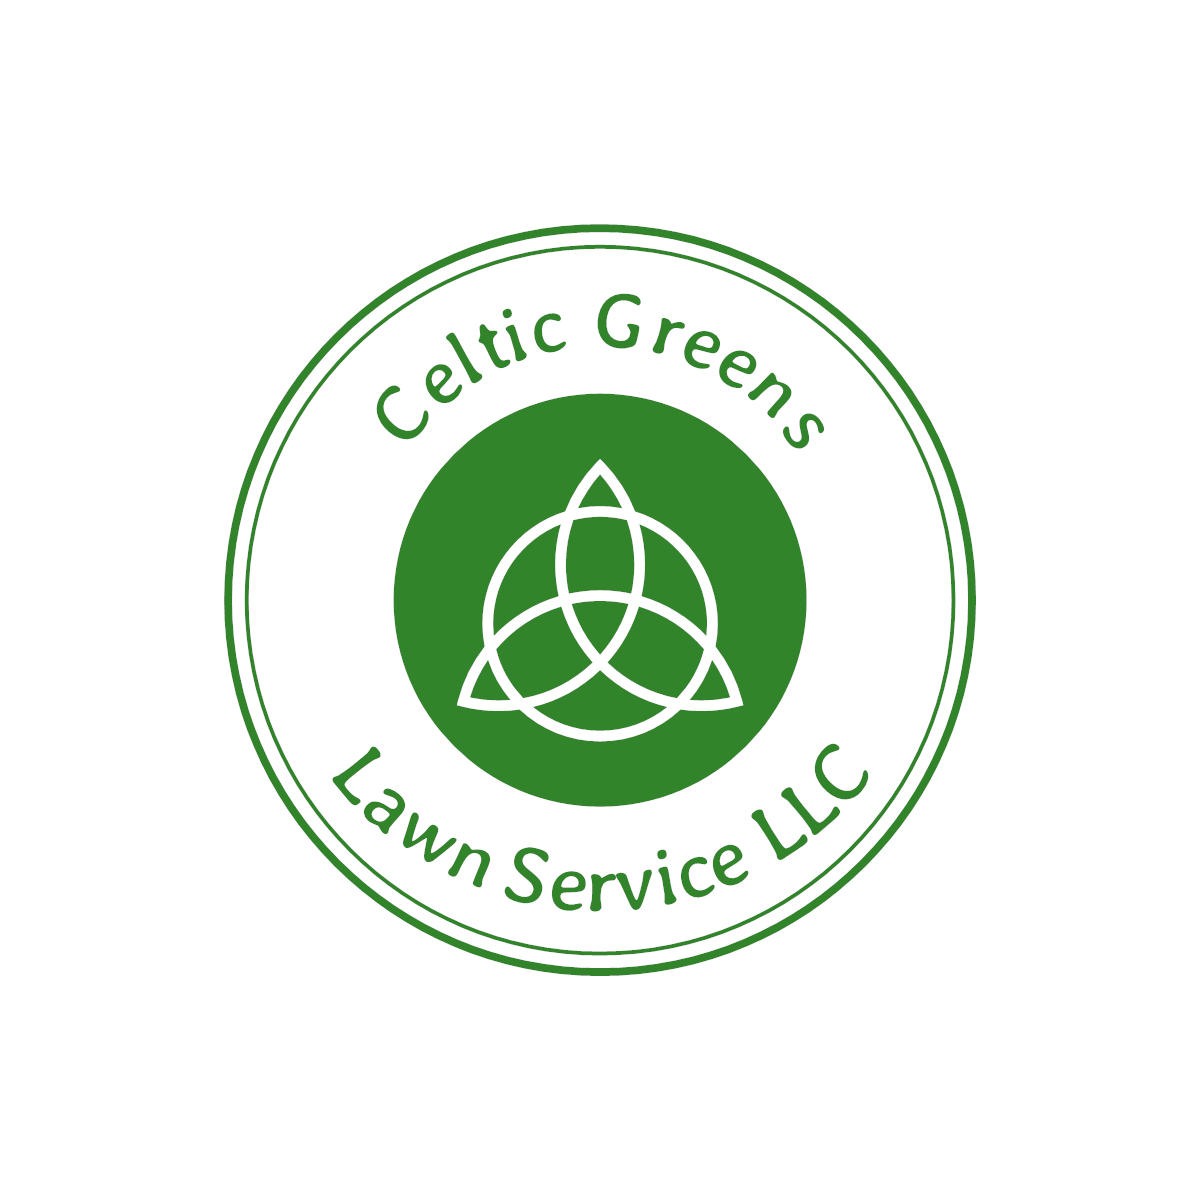 Celtic Greens Lawn Service - Pgina inicial  Facebook Logo